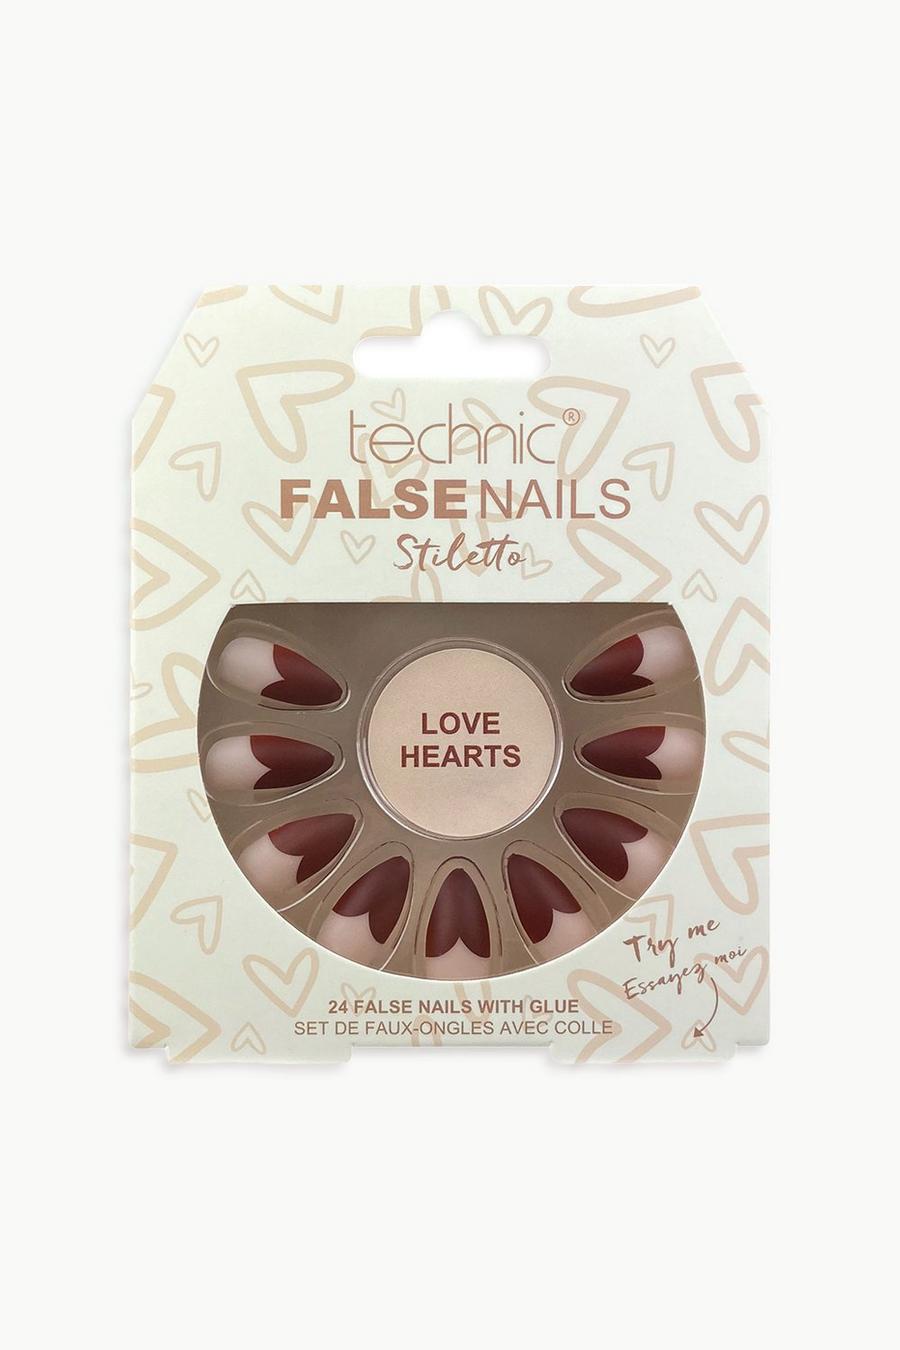 Cream white Technic False Nails Stiletto - Love Hearts